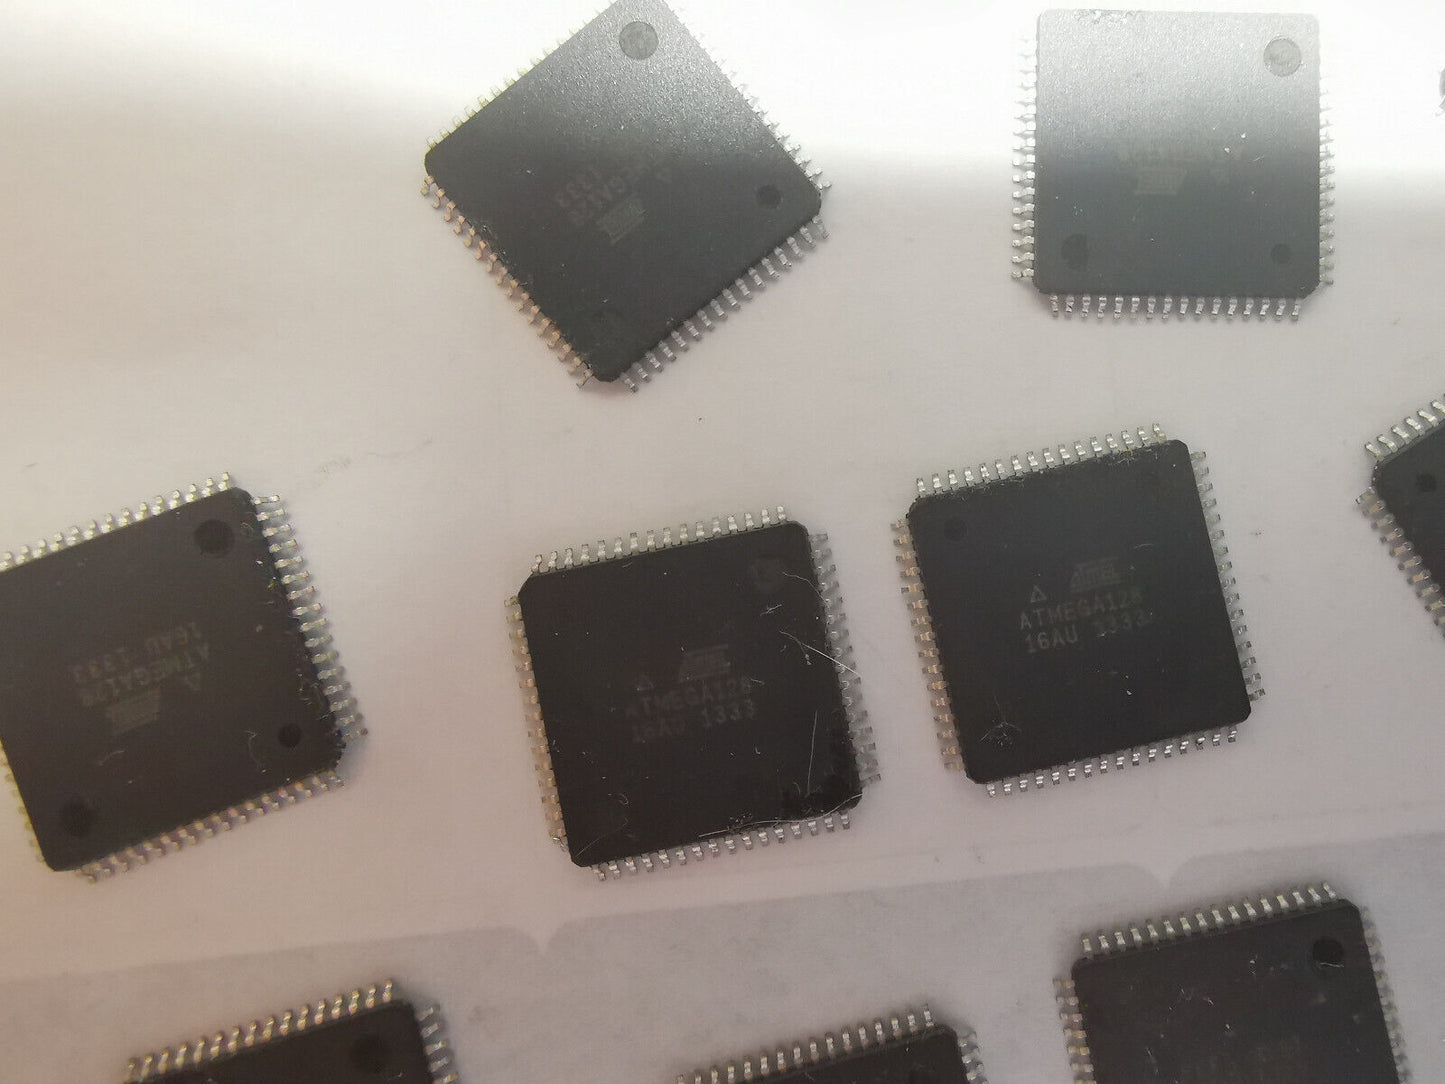 14pcs Genuine Atmega 128 16AU 8-bit Microcontroller TQFP